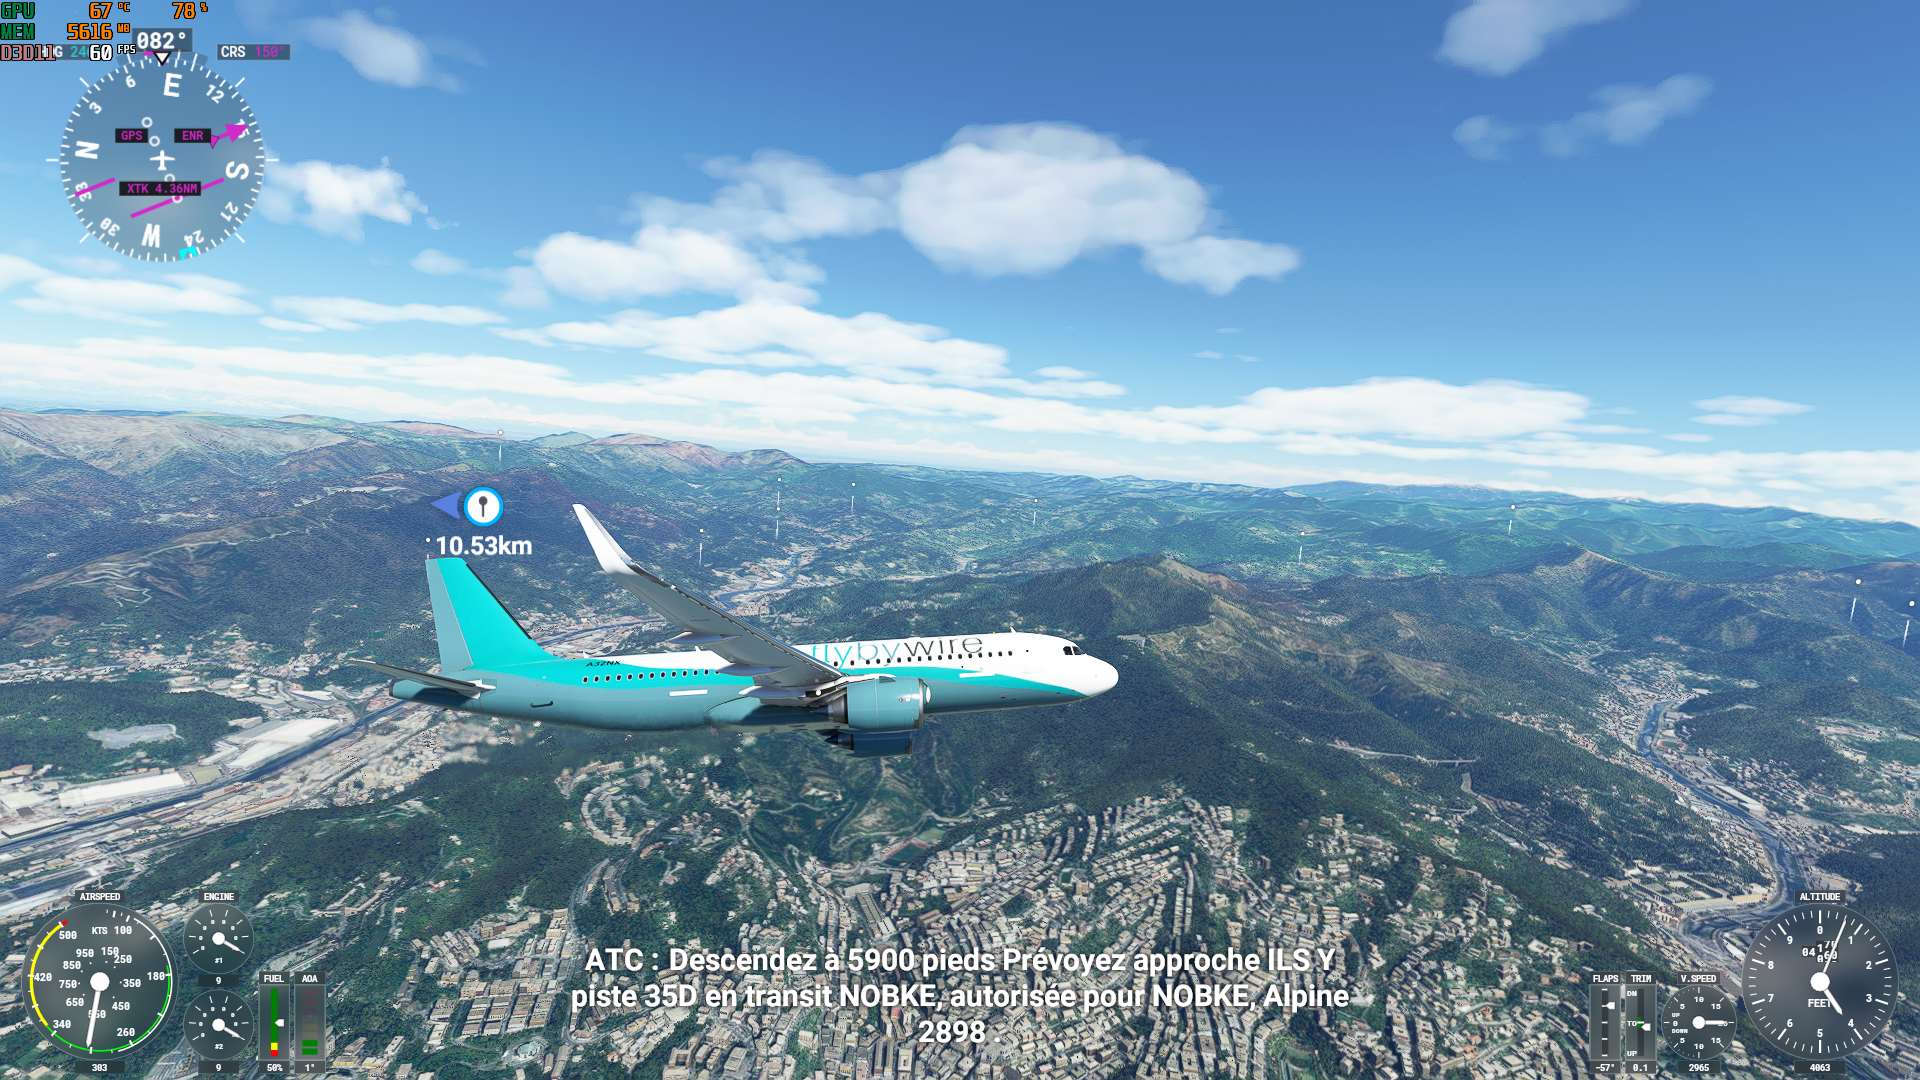 Microsoft Flight Simulator.jpg